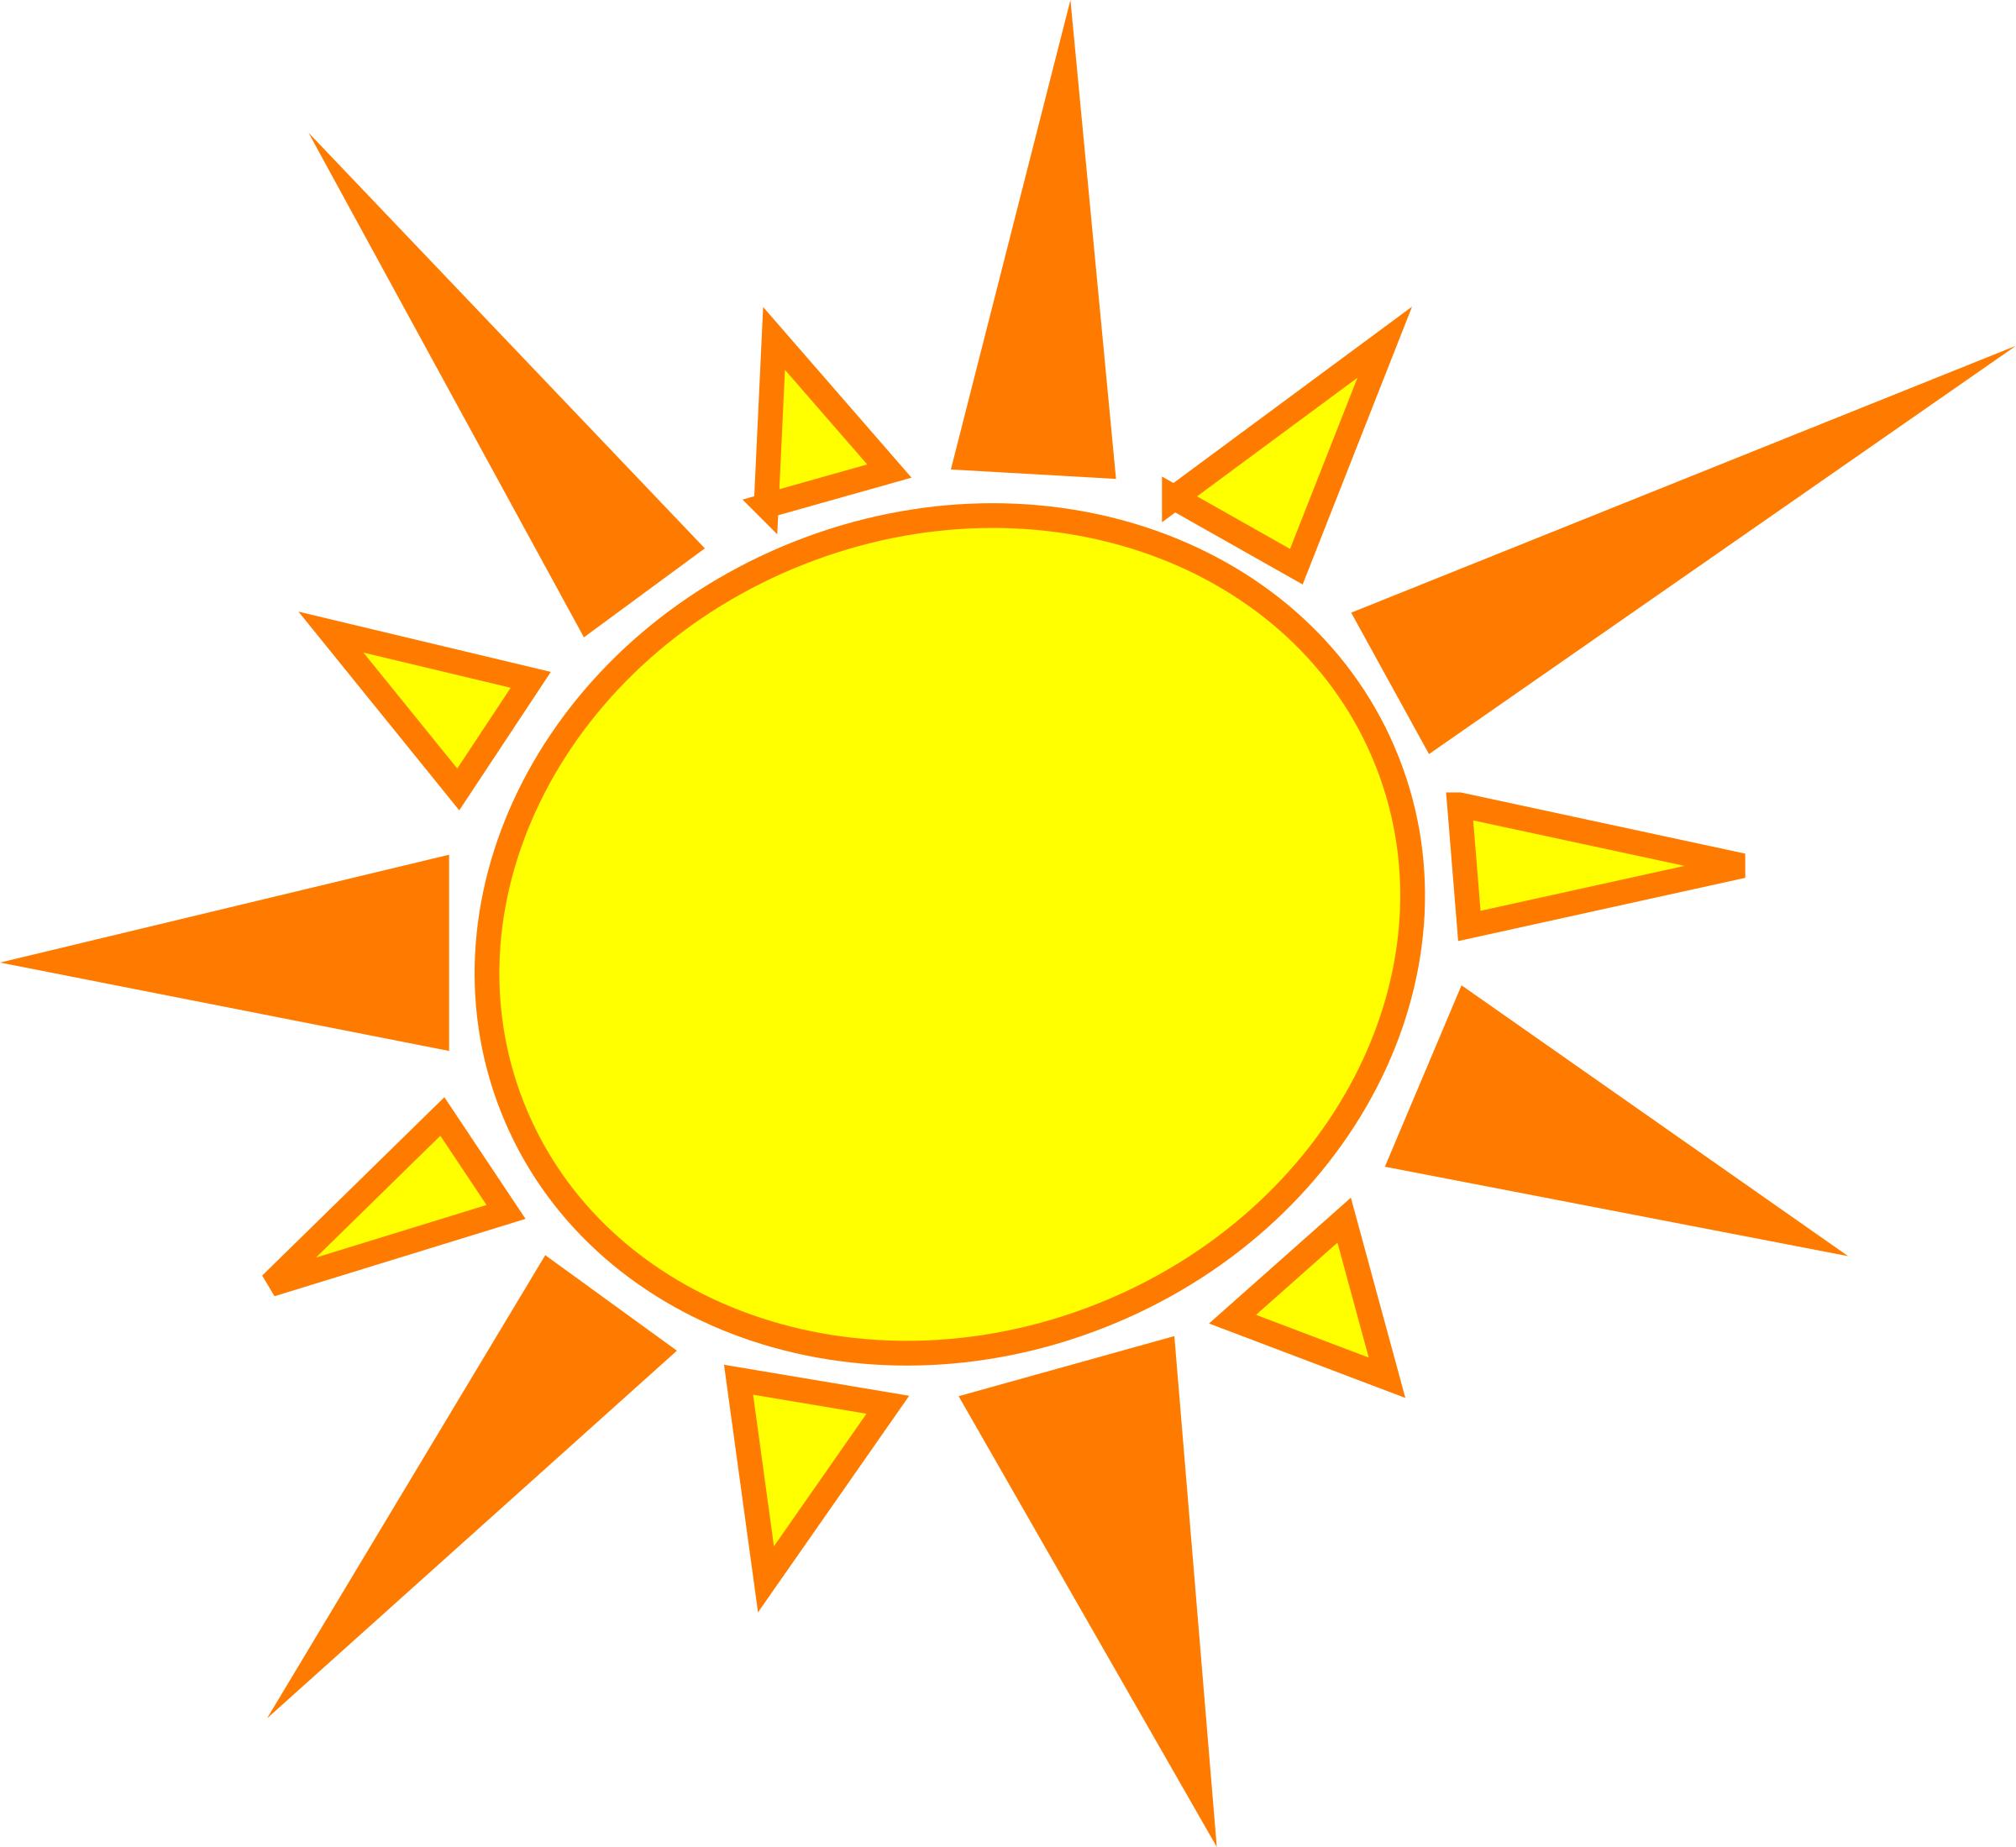 Yellow and orange sun icons